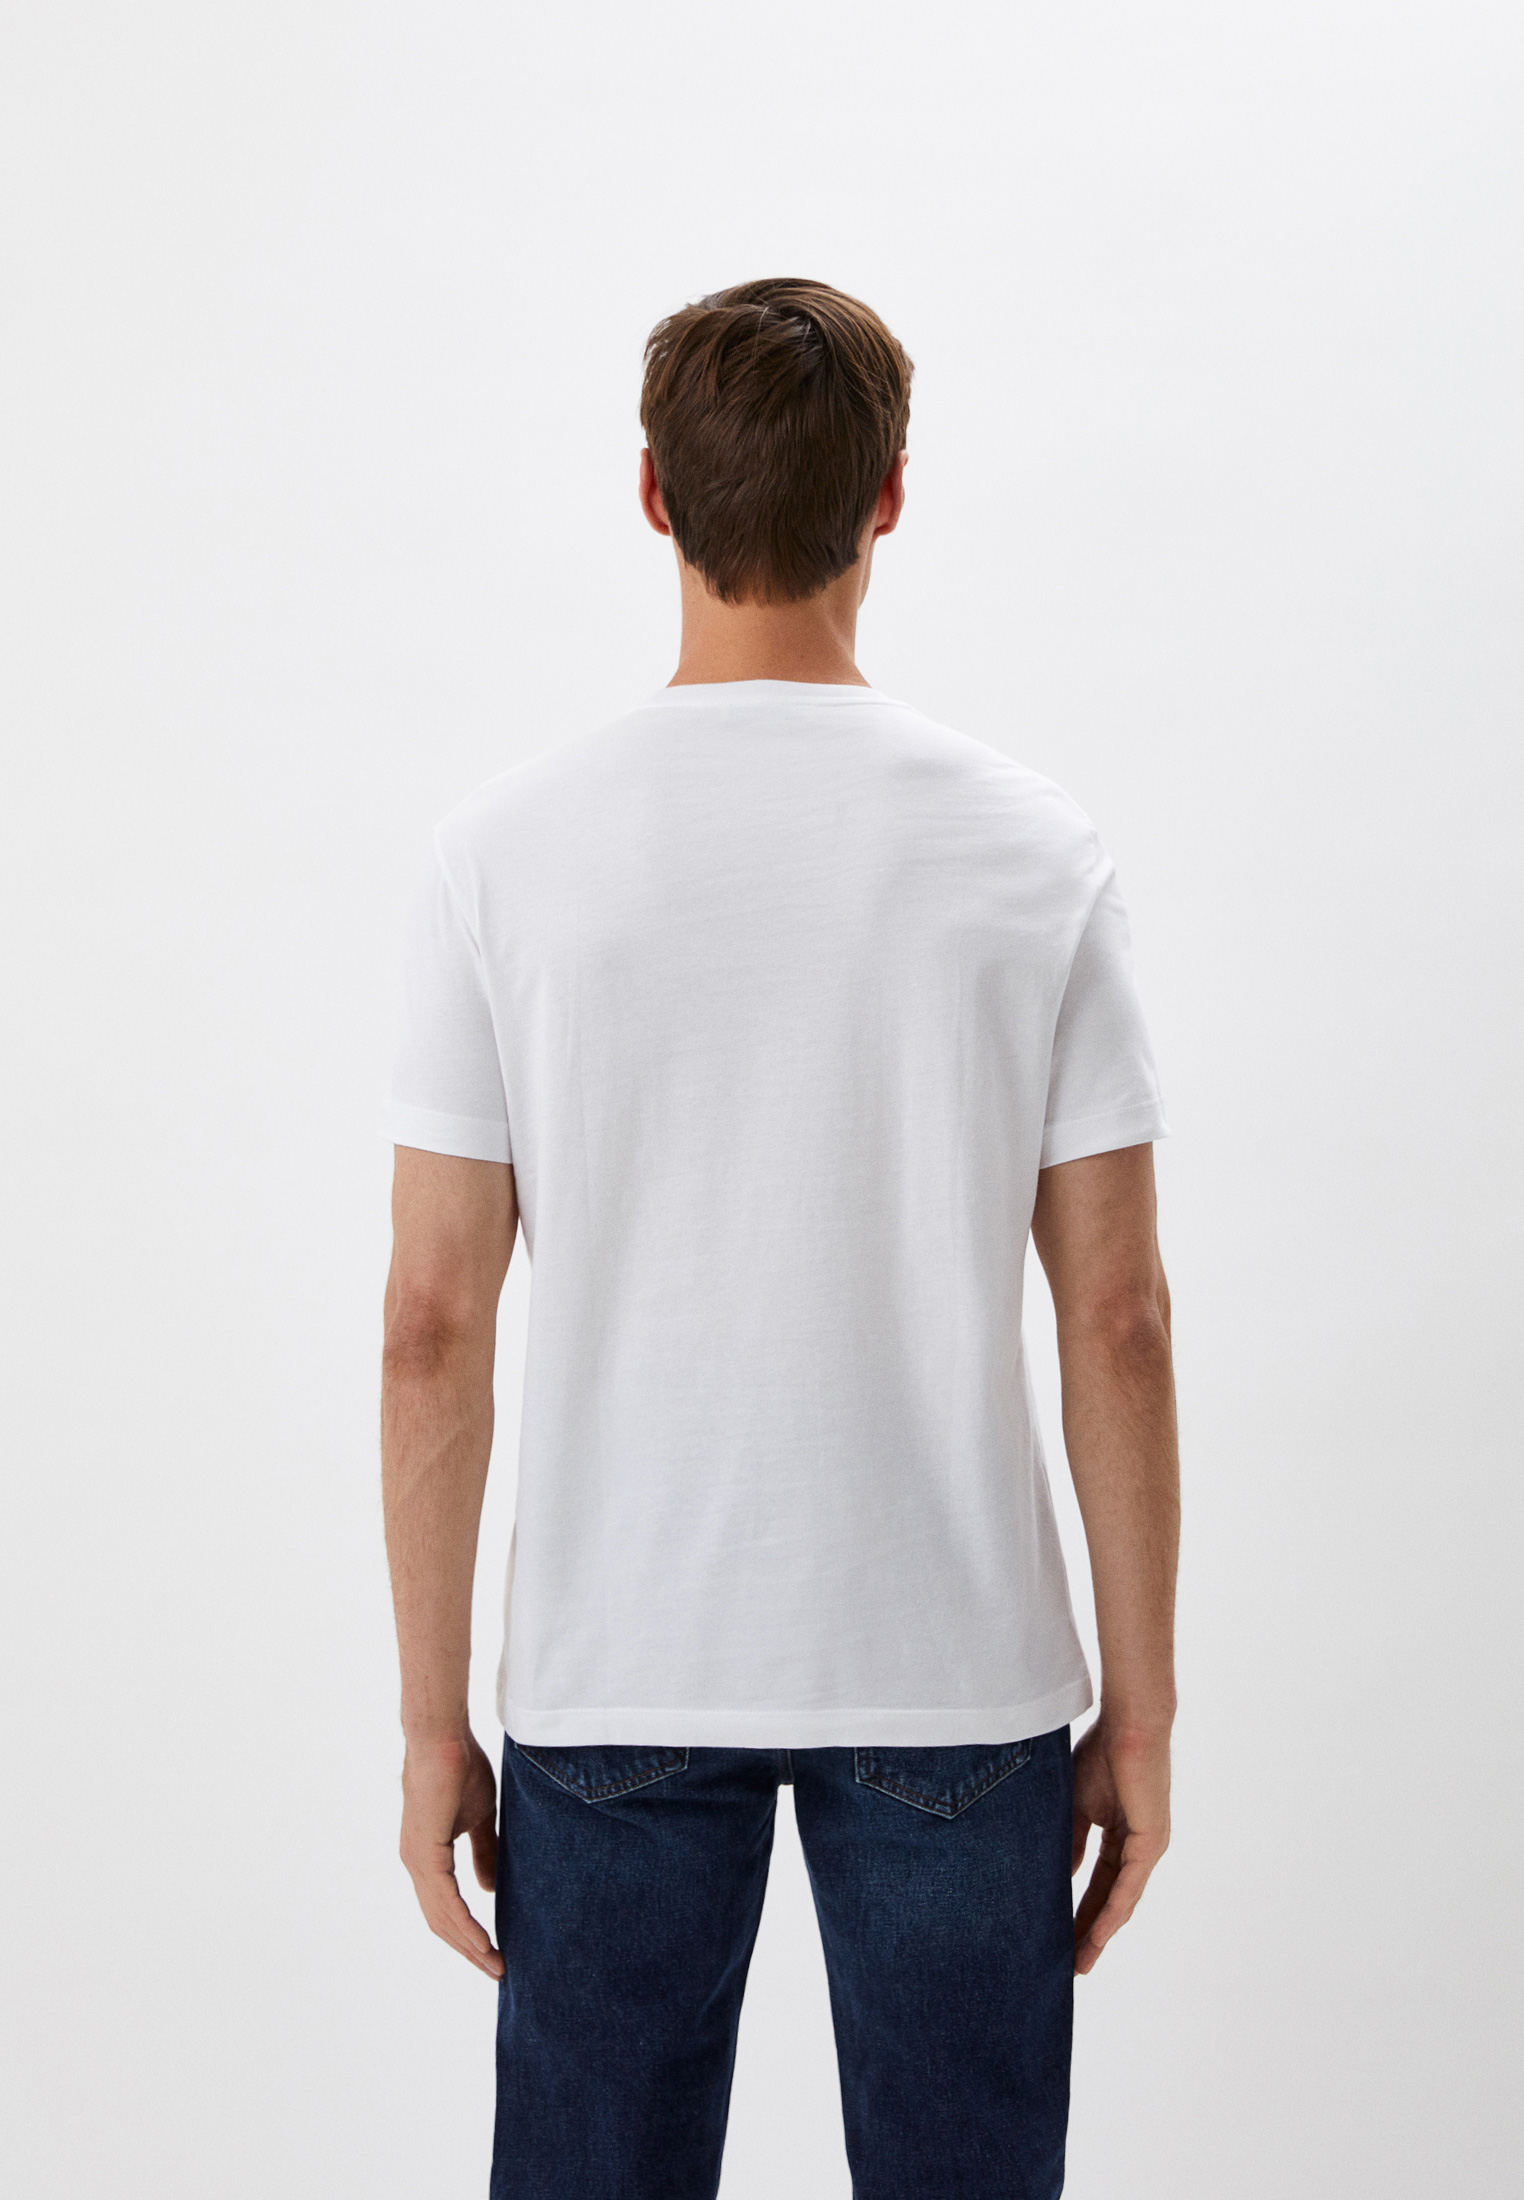 Мужская футболка Trussardi (Труссарди) 52T00629-1T005651: изображение 3